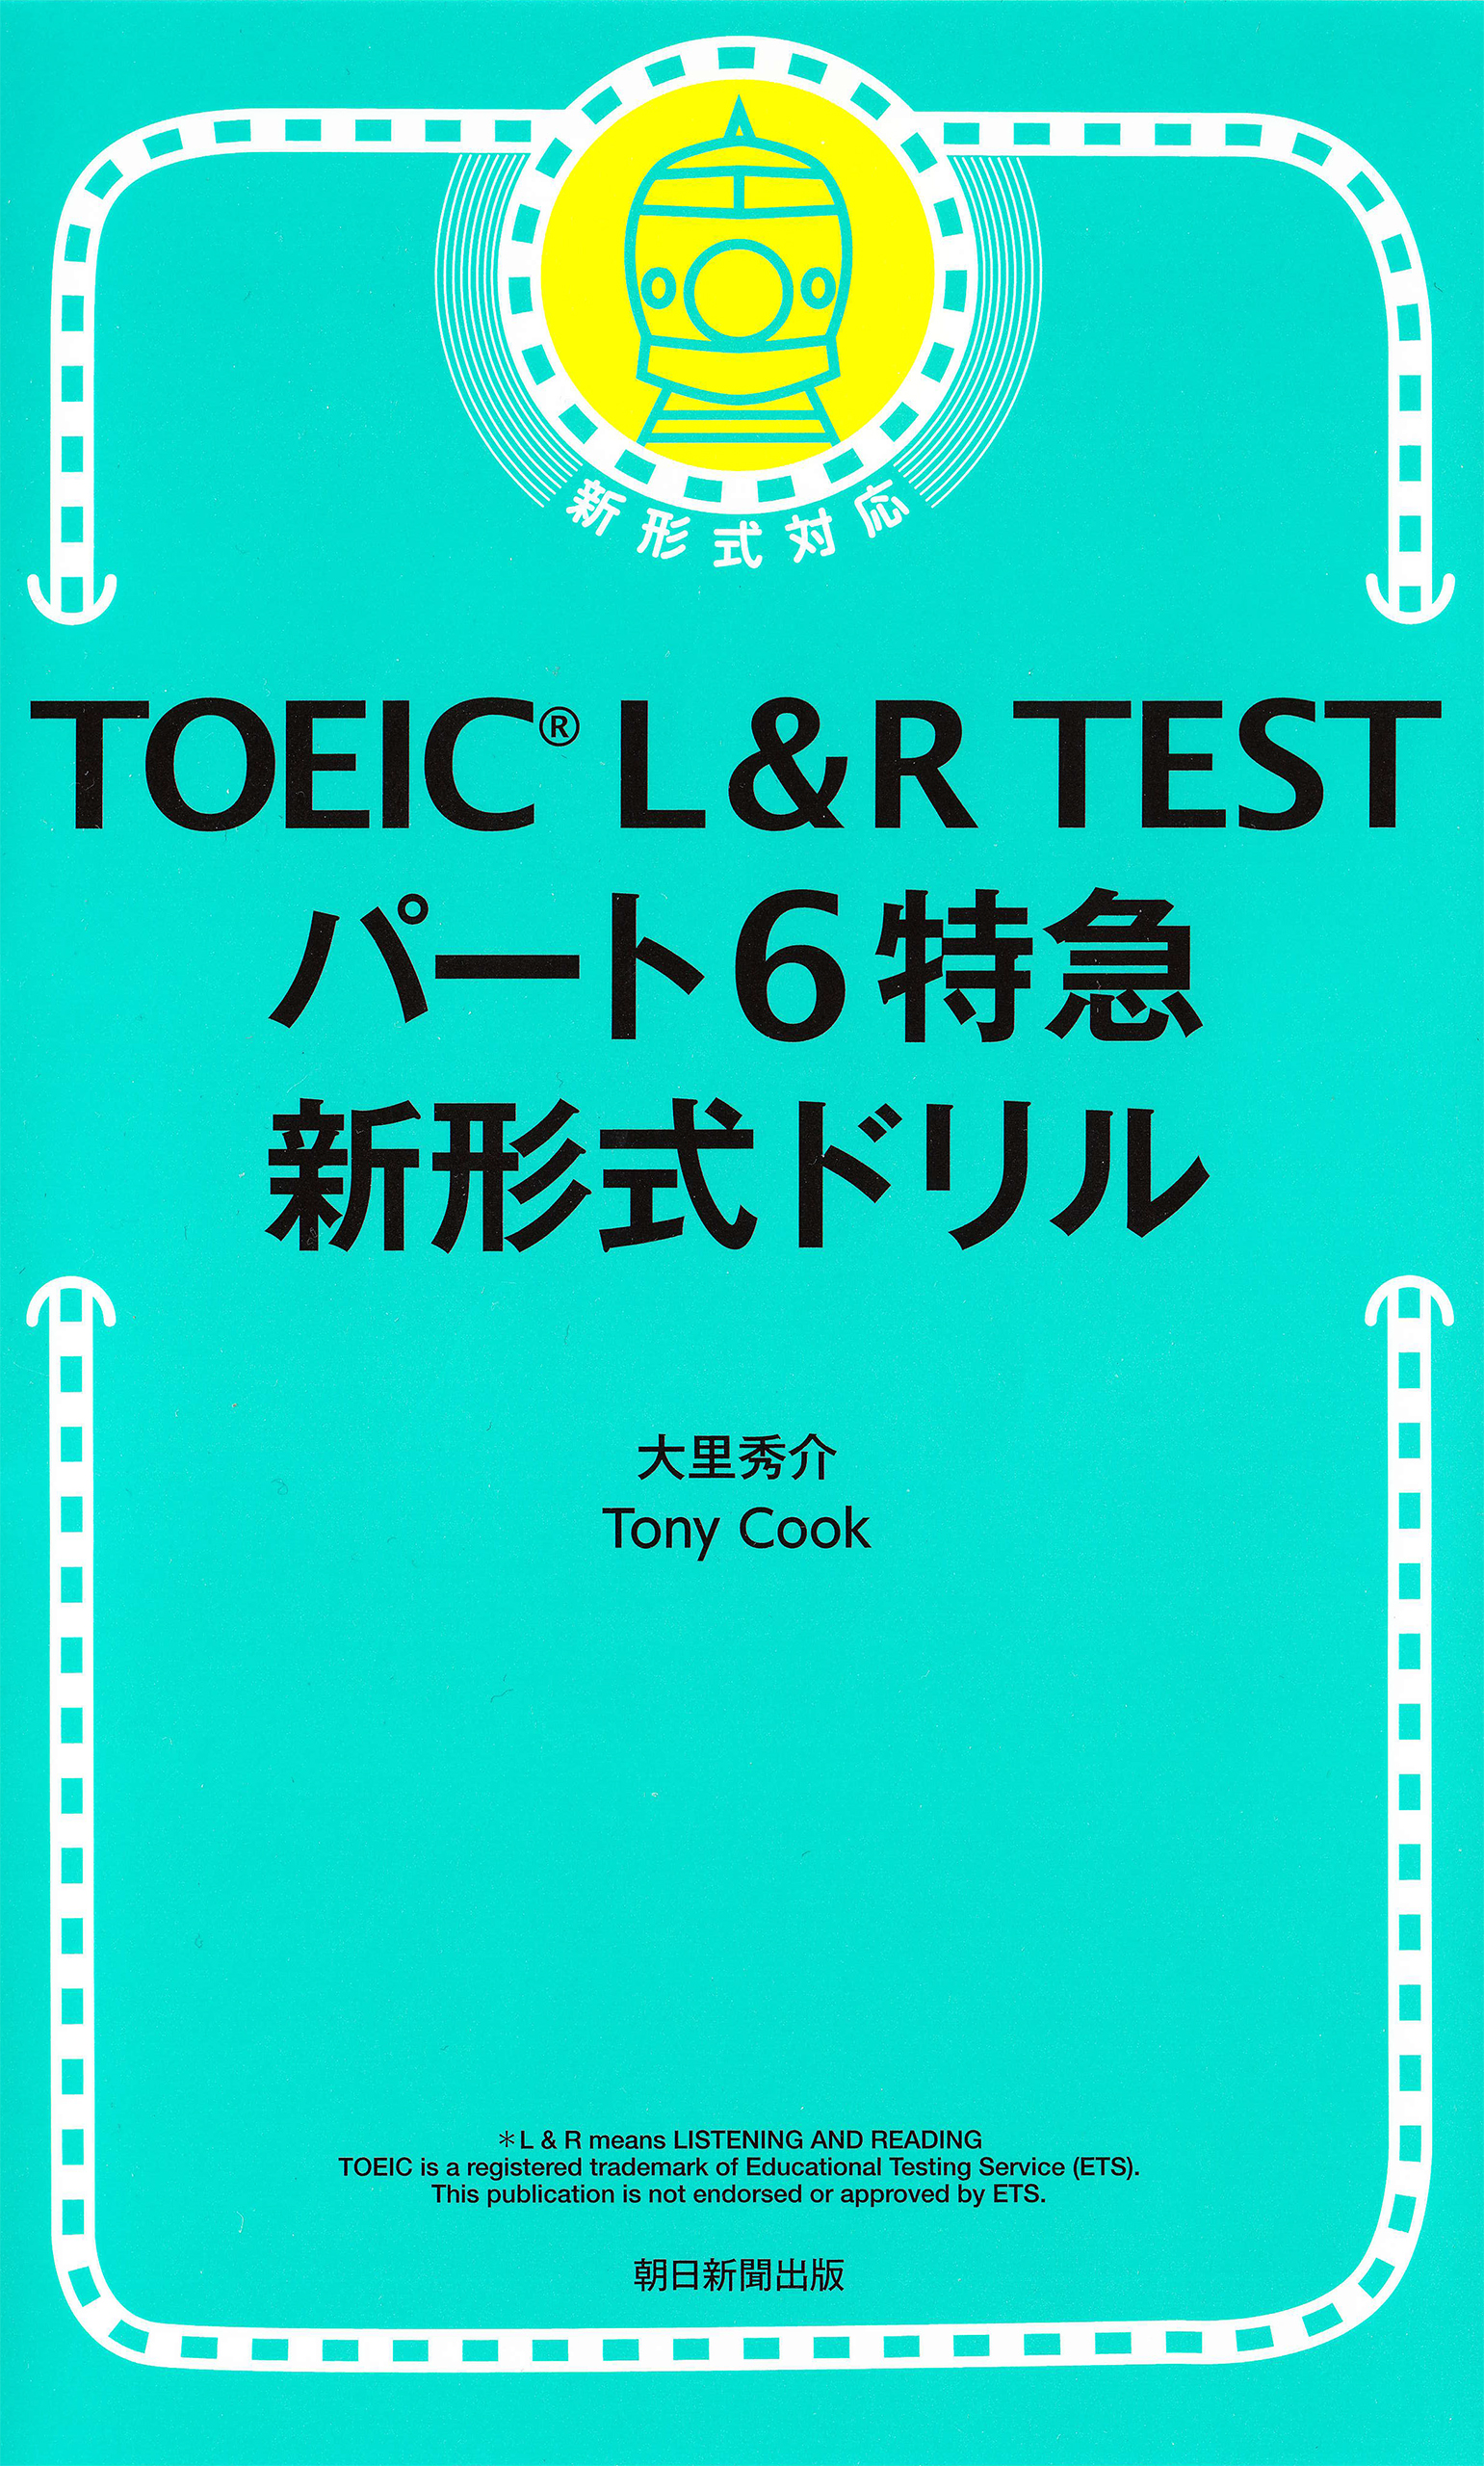 TOEIC L&R TEST パート6特急 新形式ドリル - 大里秀介/トニークック